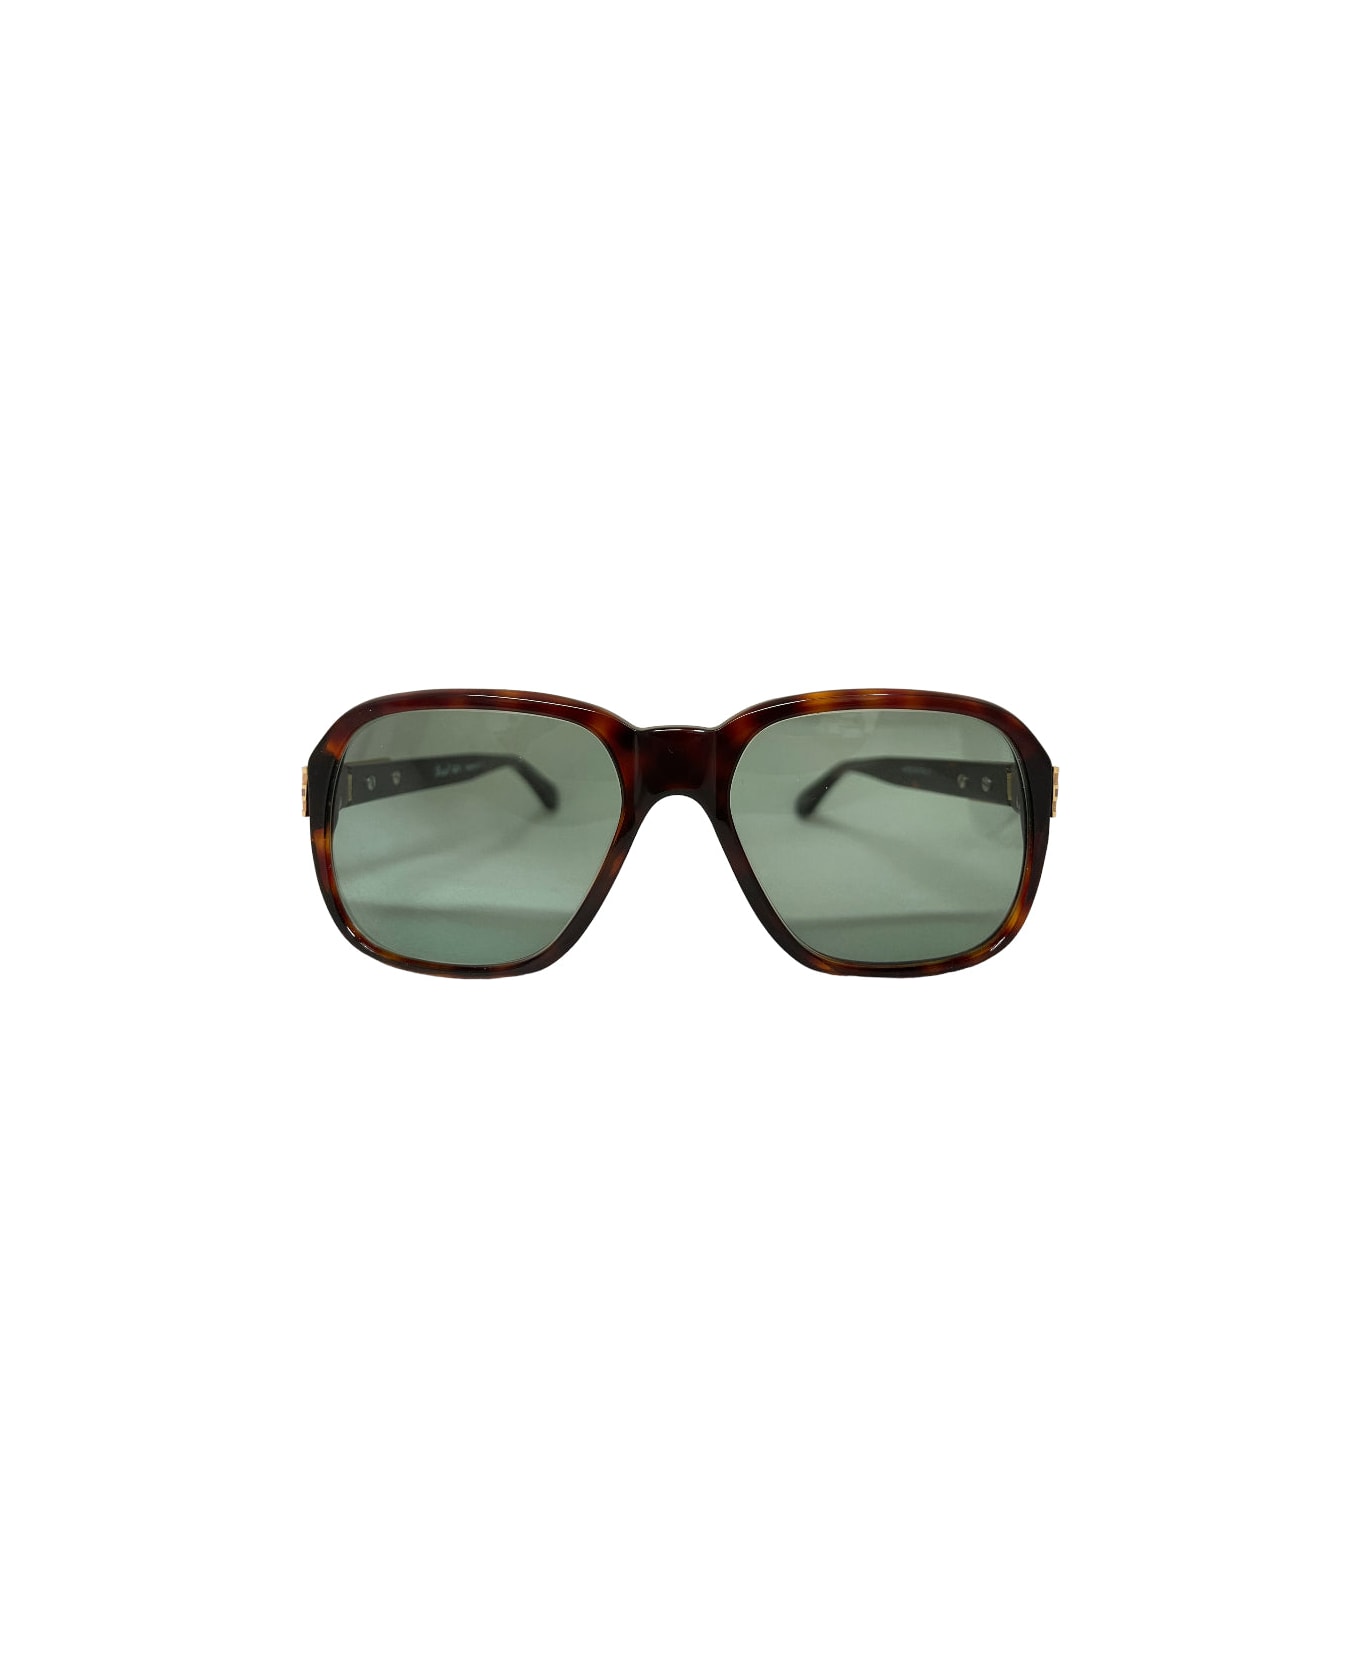 Persol Manager - Havana Sunglasses サングラス